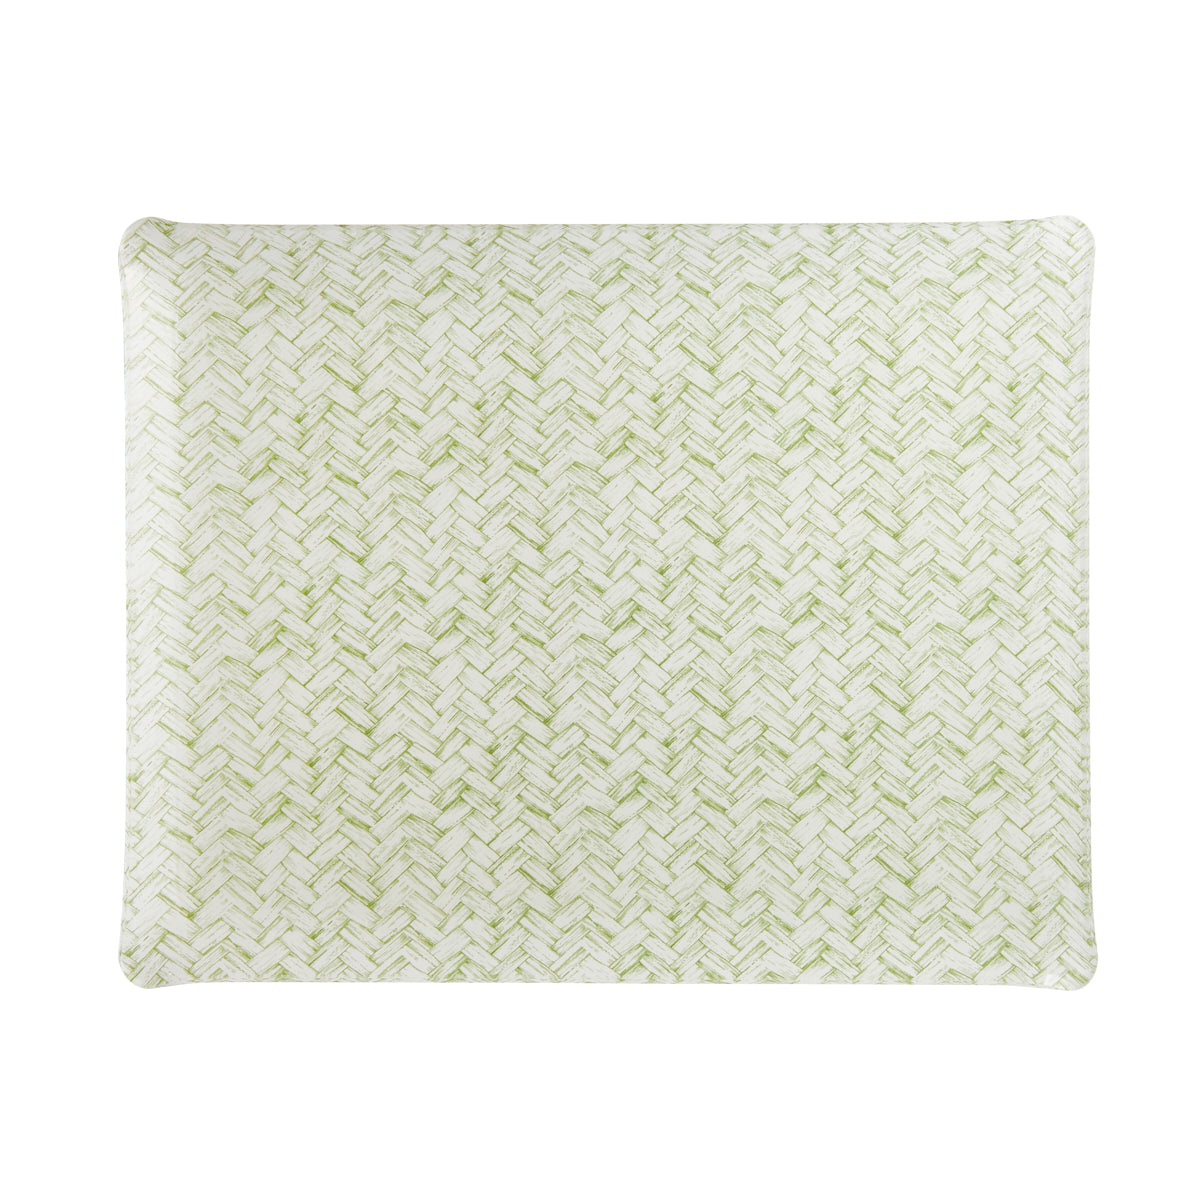 Fabric Tray Large 46X36 - Green Basketweave